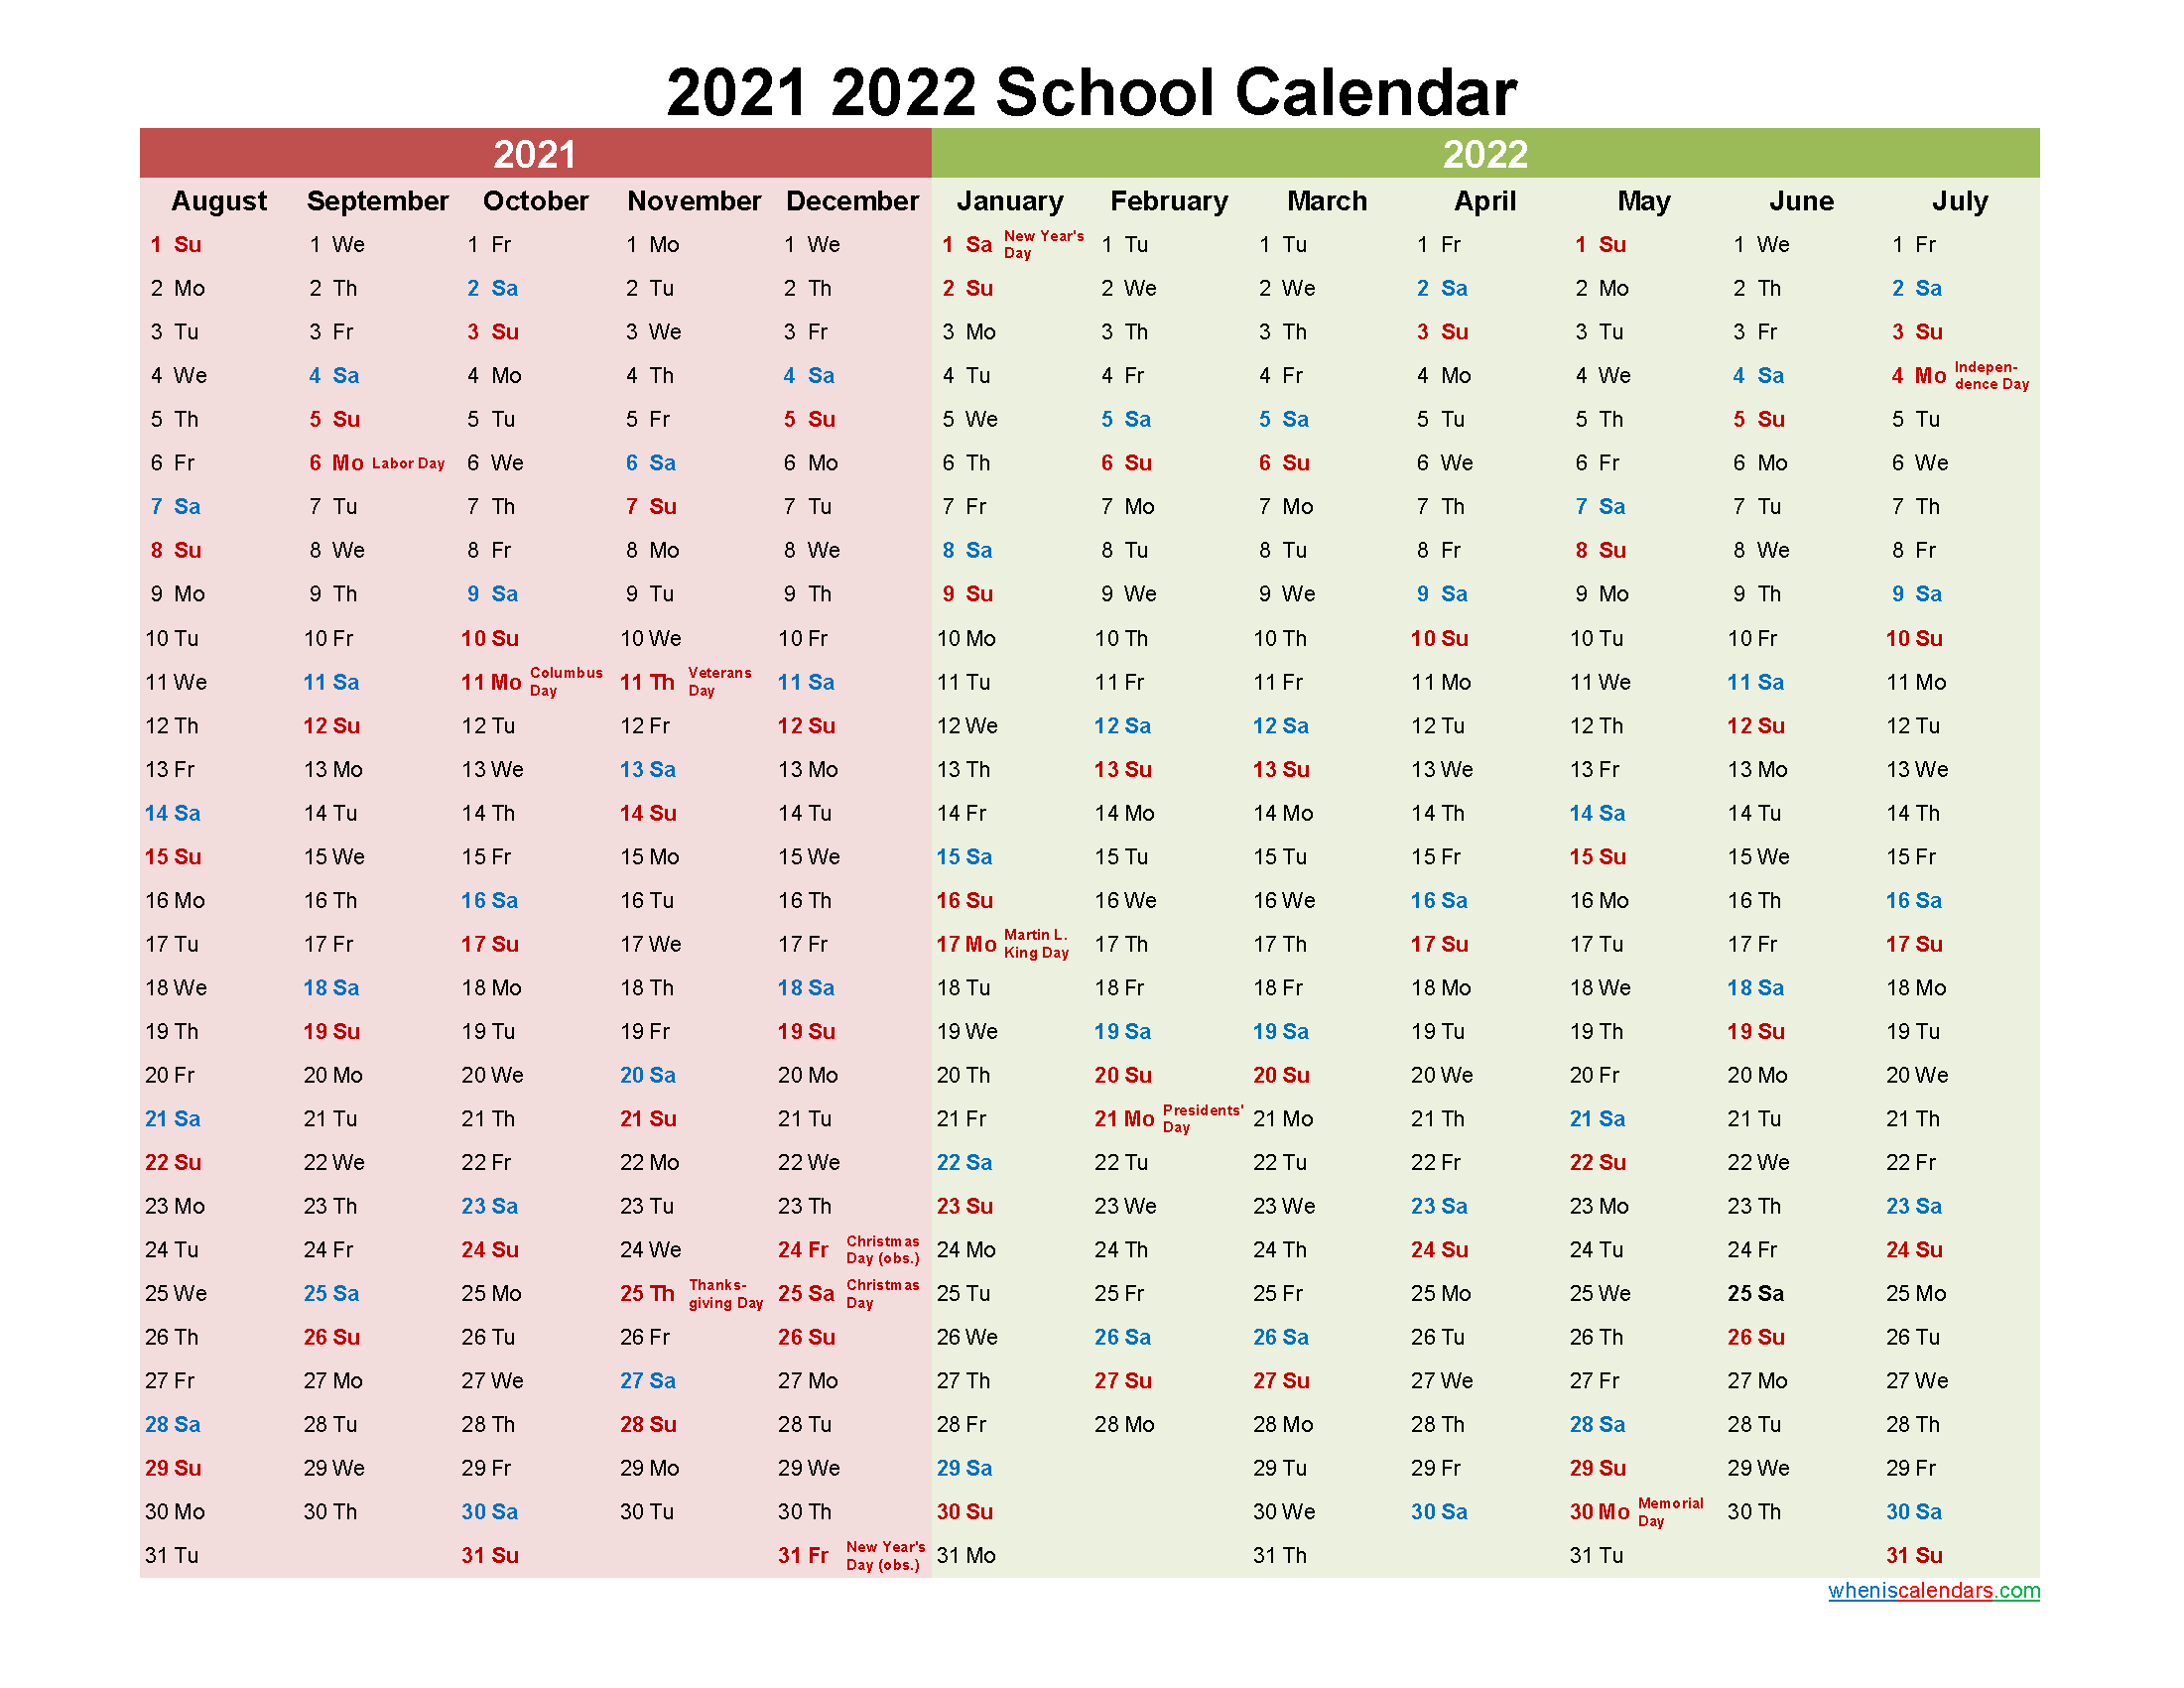 2021 and 2022 School Calendar Printable - Template No.22scl32